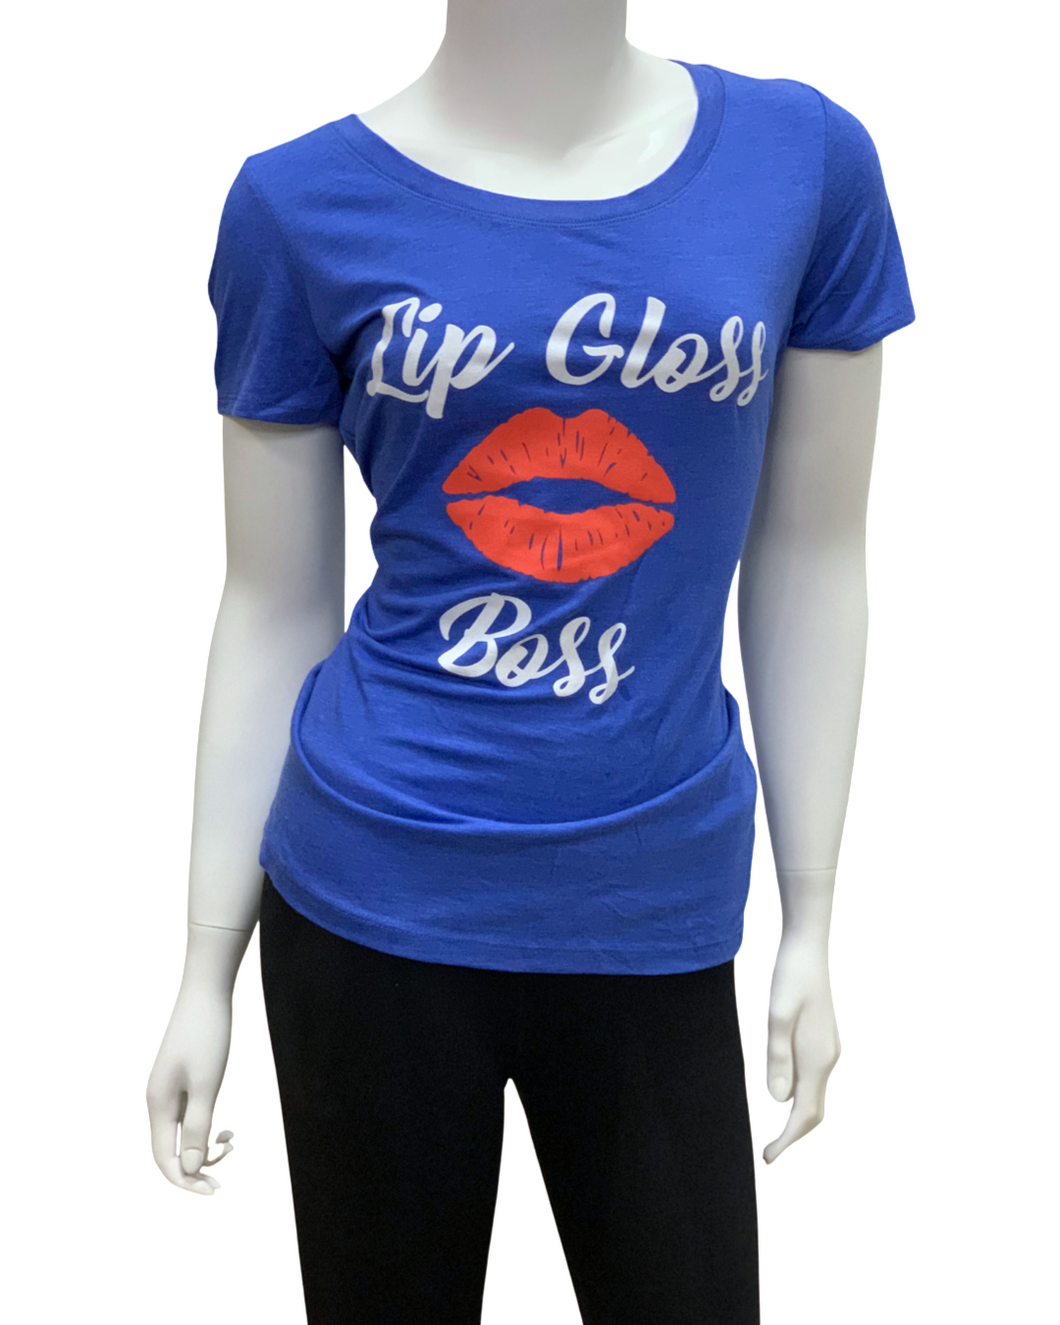 Blue Lip Gloss Boss Scoop Neck